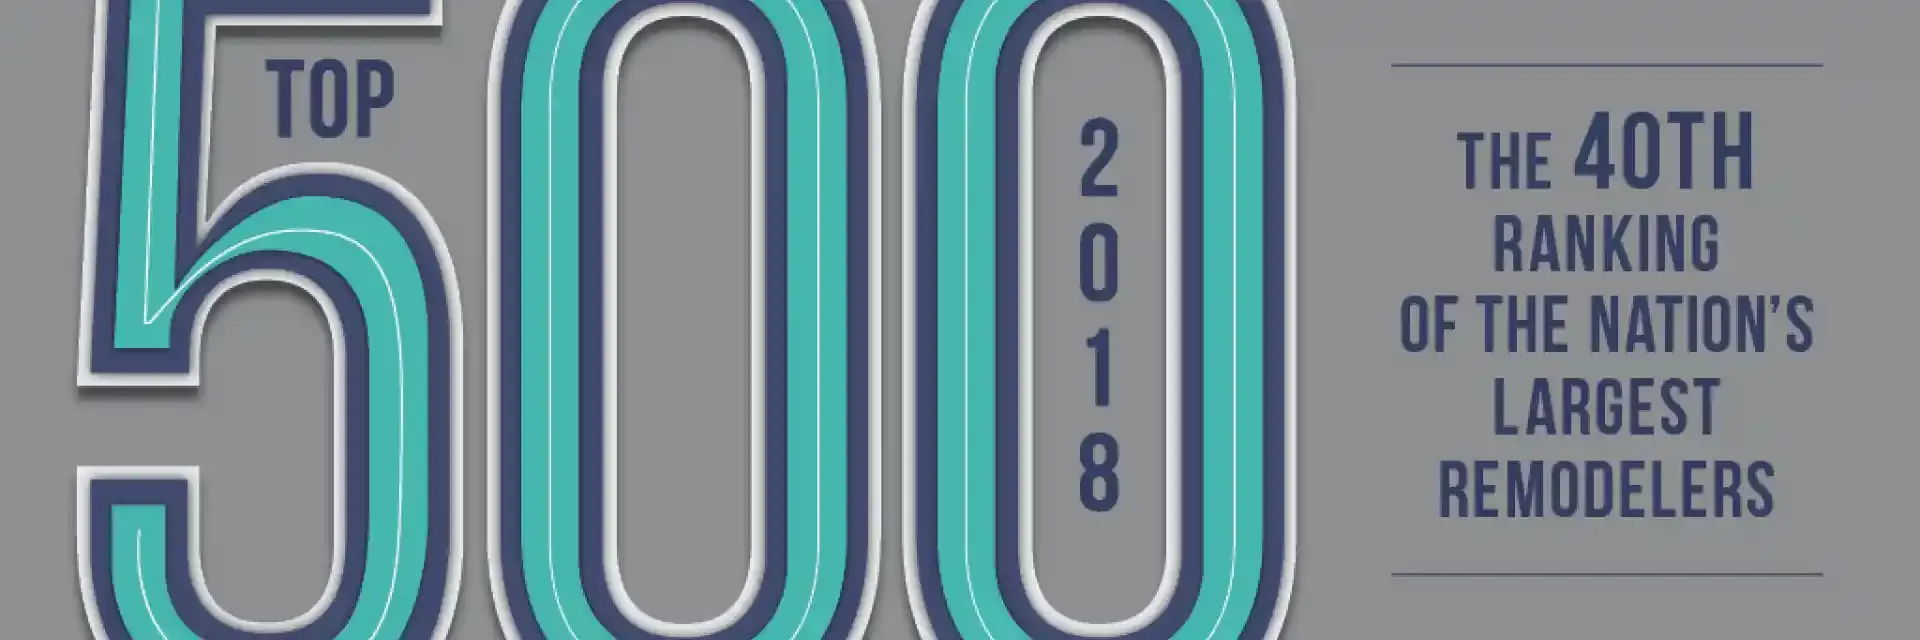 Qualified Remodeler Top 500 2018 logo